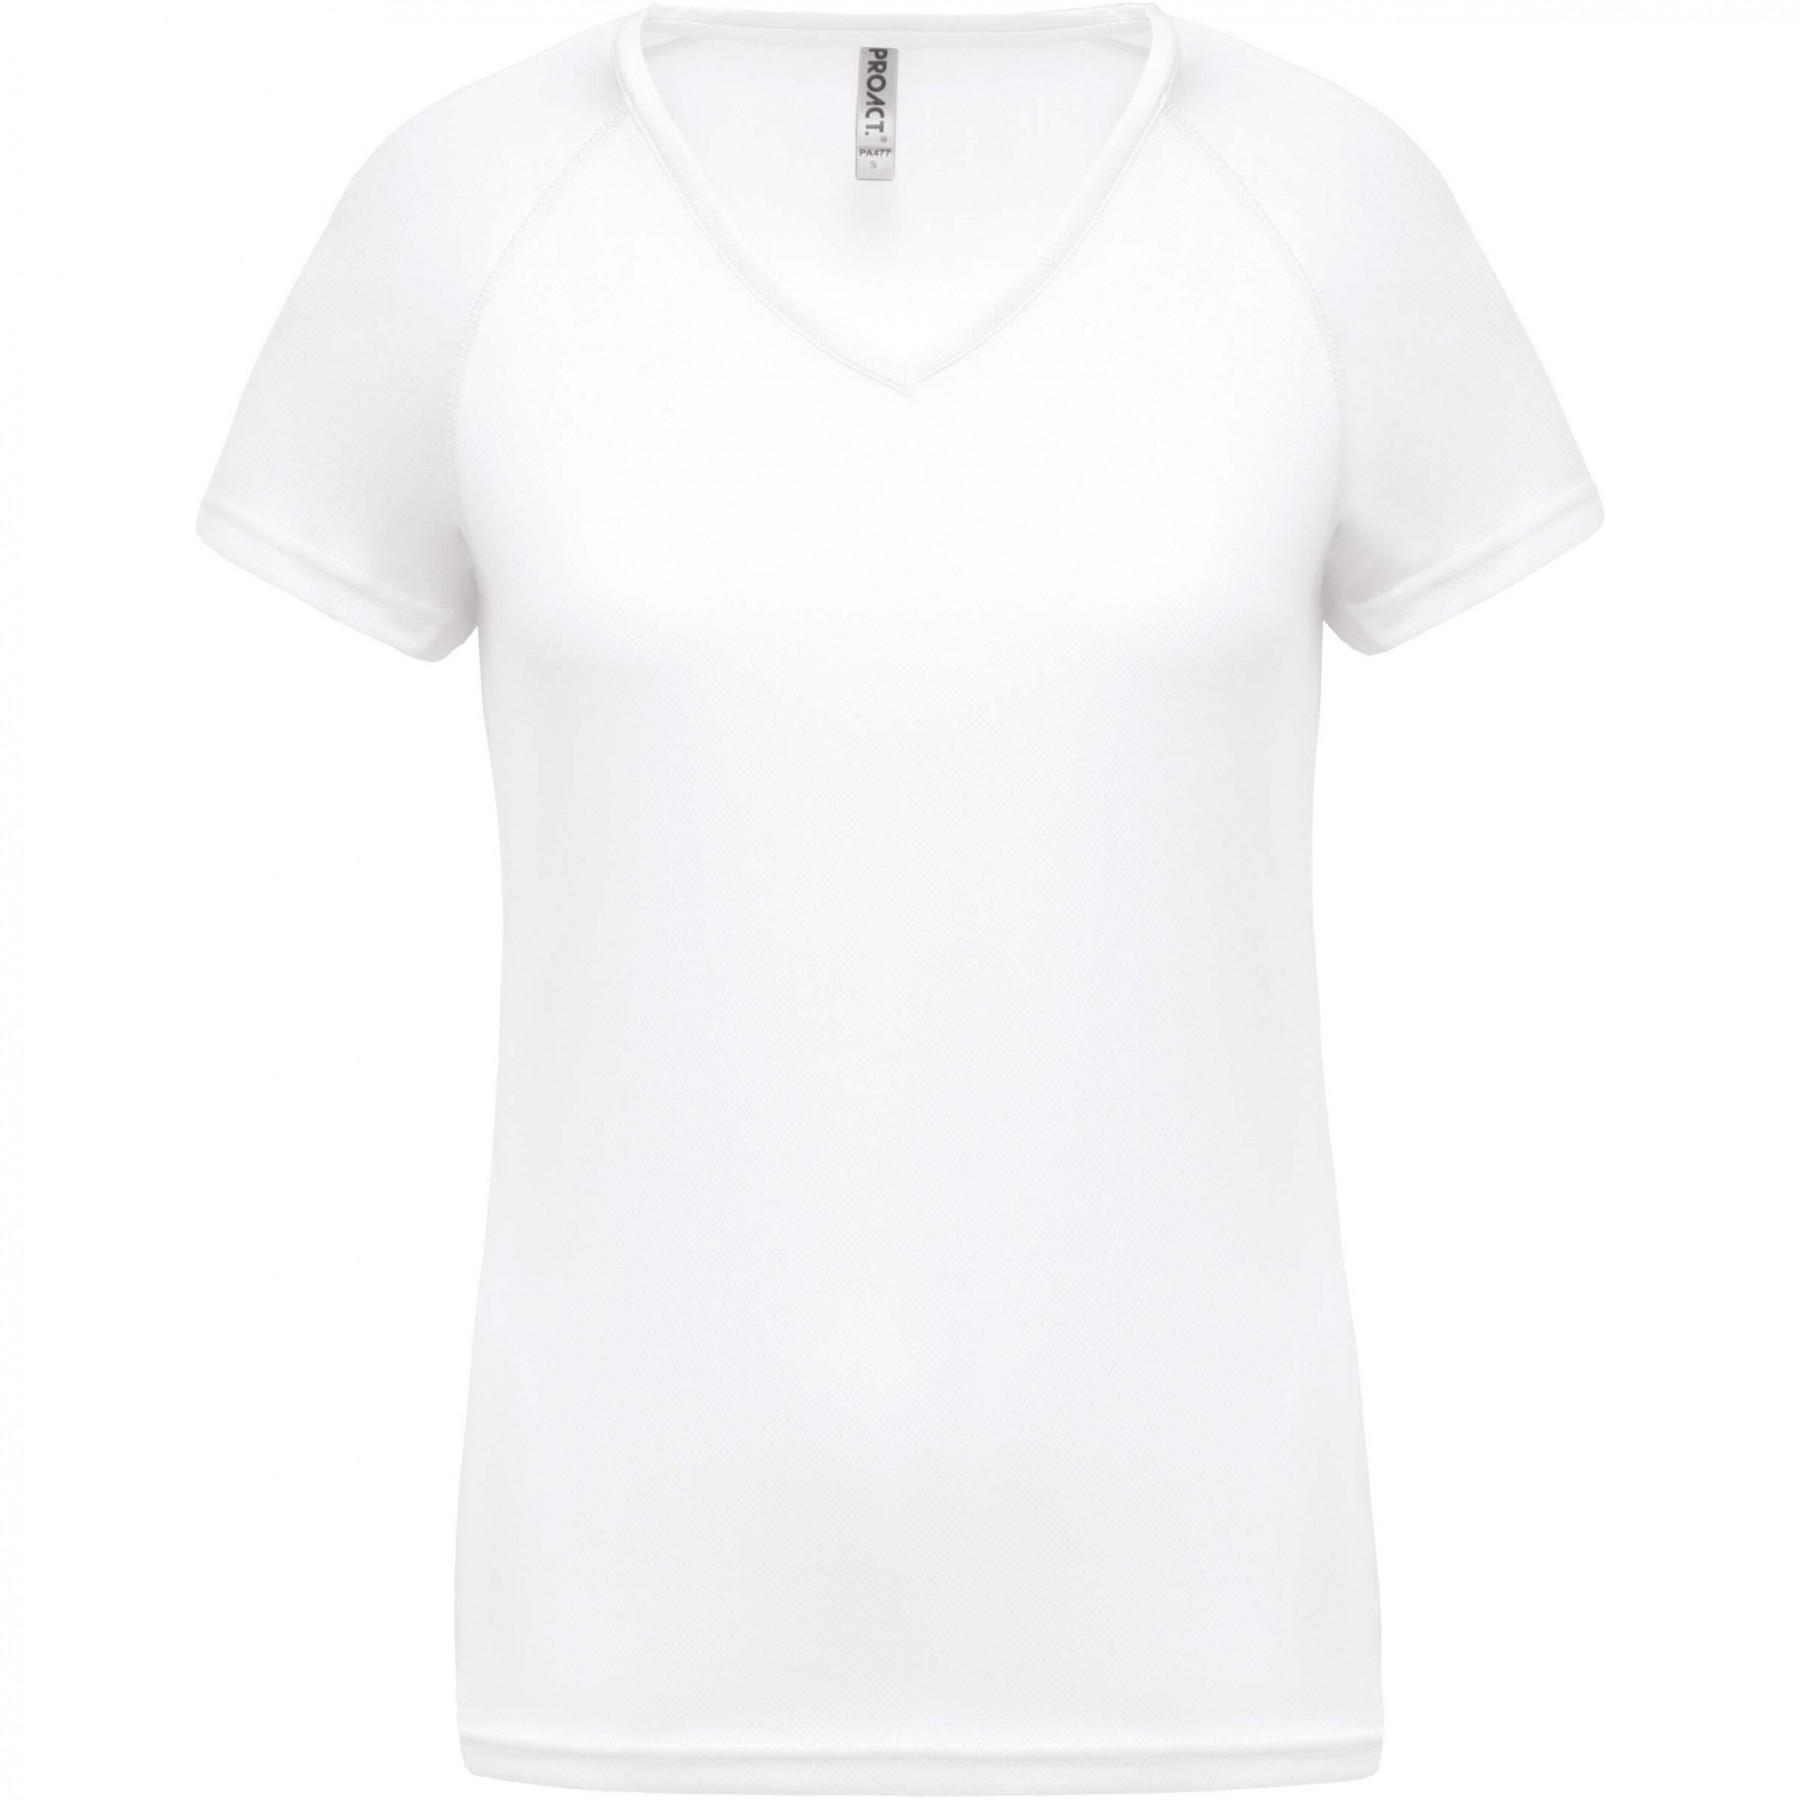 Koszulka damska v-neck Proact Sport blanc